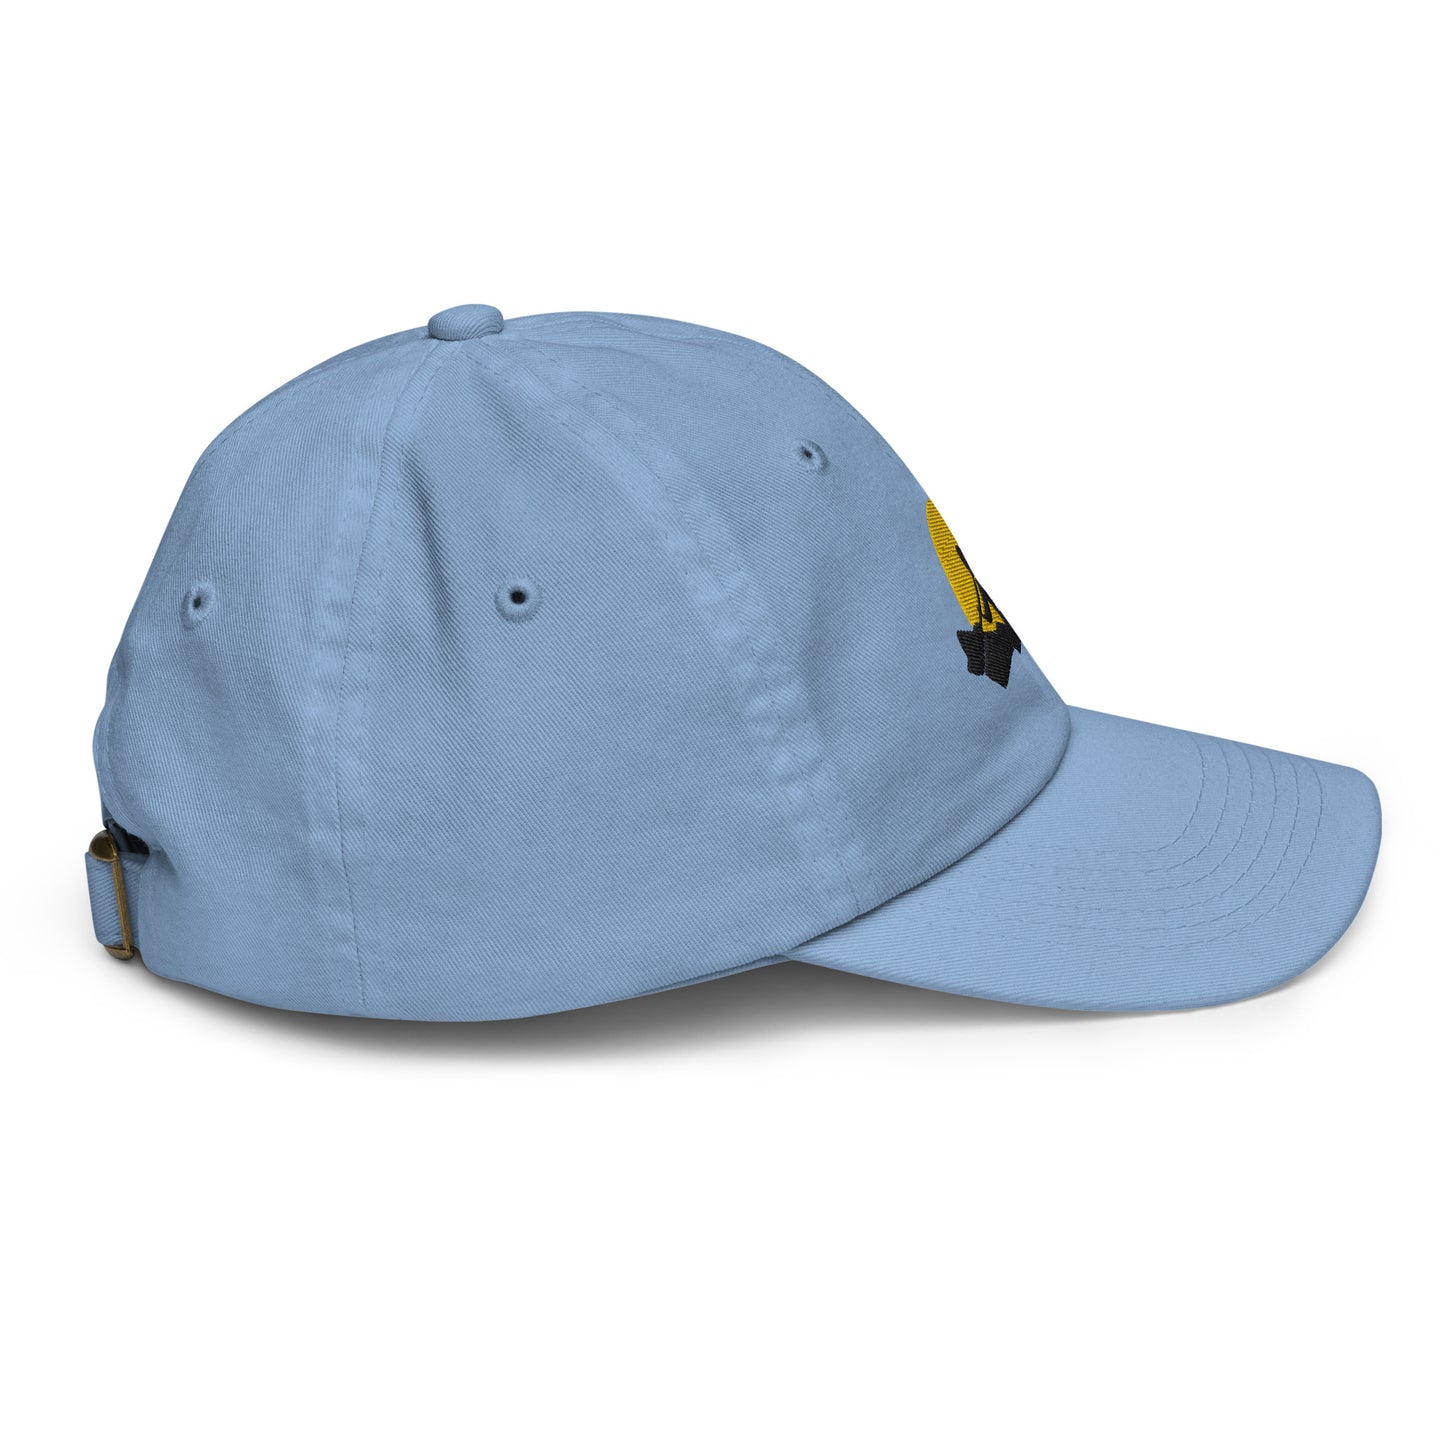 Cape Kayaker - Youth baseball cap